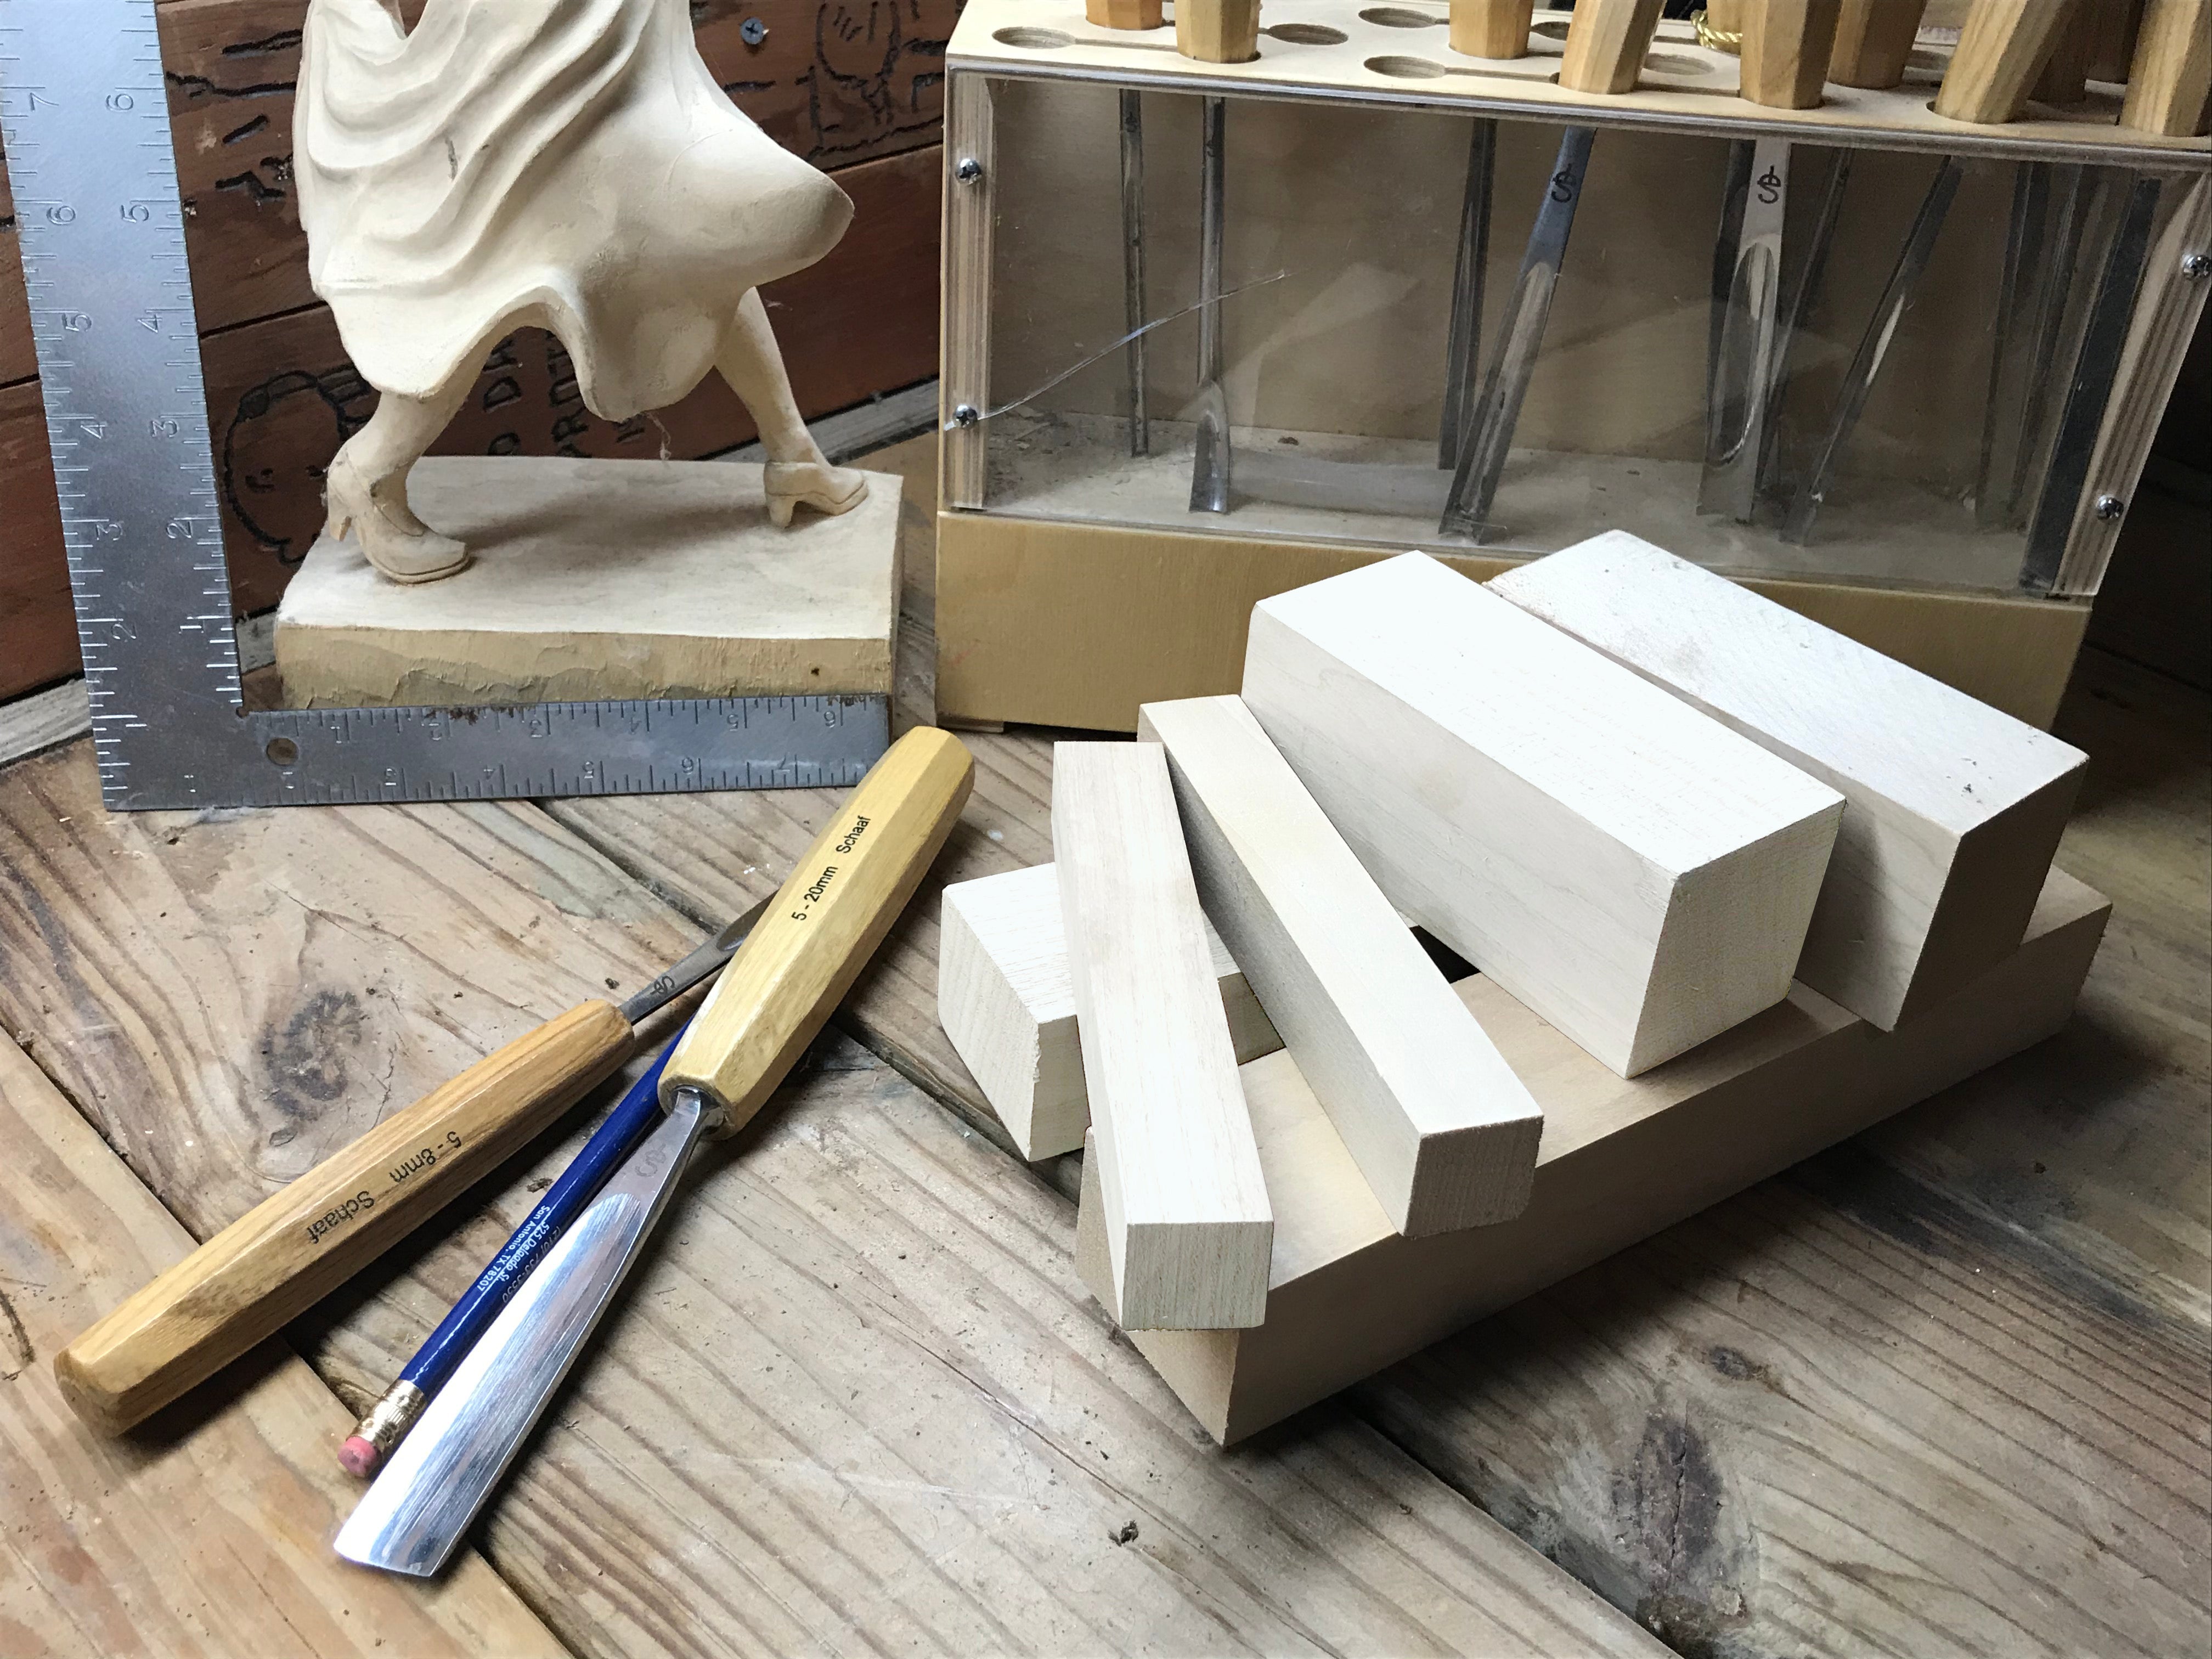 Exotic Wood Zone Set of 4, Basswood Carving Blocks/turning Blocks Kit 2 X 2  X 6 Carved Wood Whittling Wood Carving Blocks DIY 